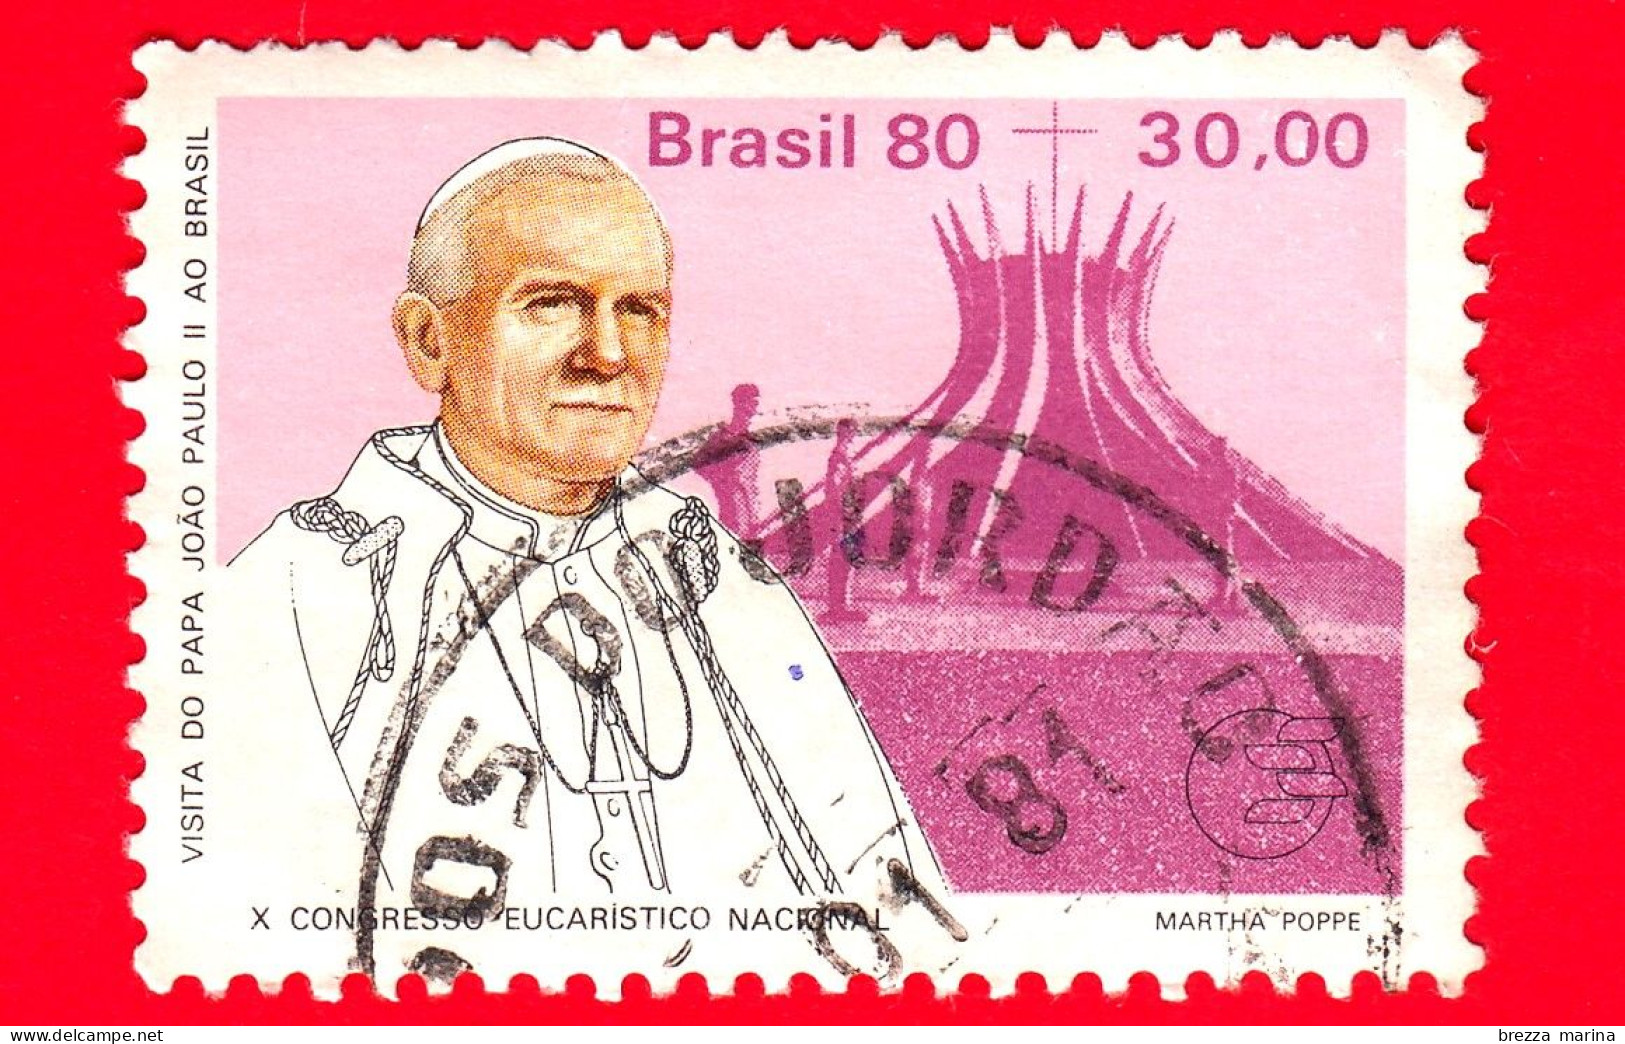 BRASILE - Usato - 1980 - Visita Di Papa Giovanni Paolo II In Brasile - Cattedrale Di Brasilia - 30.00 - Oblitérés